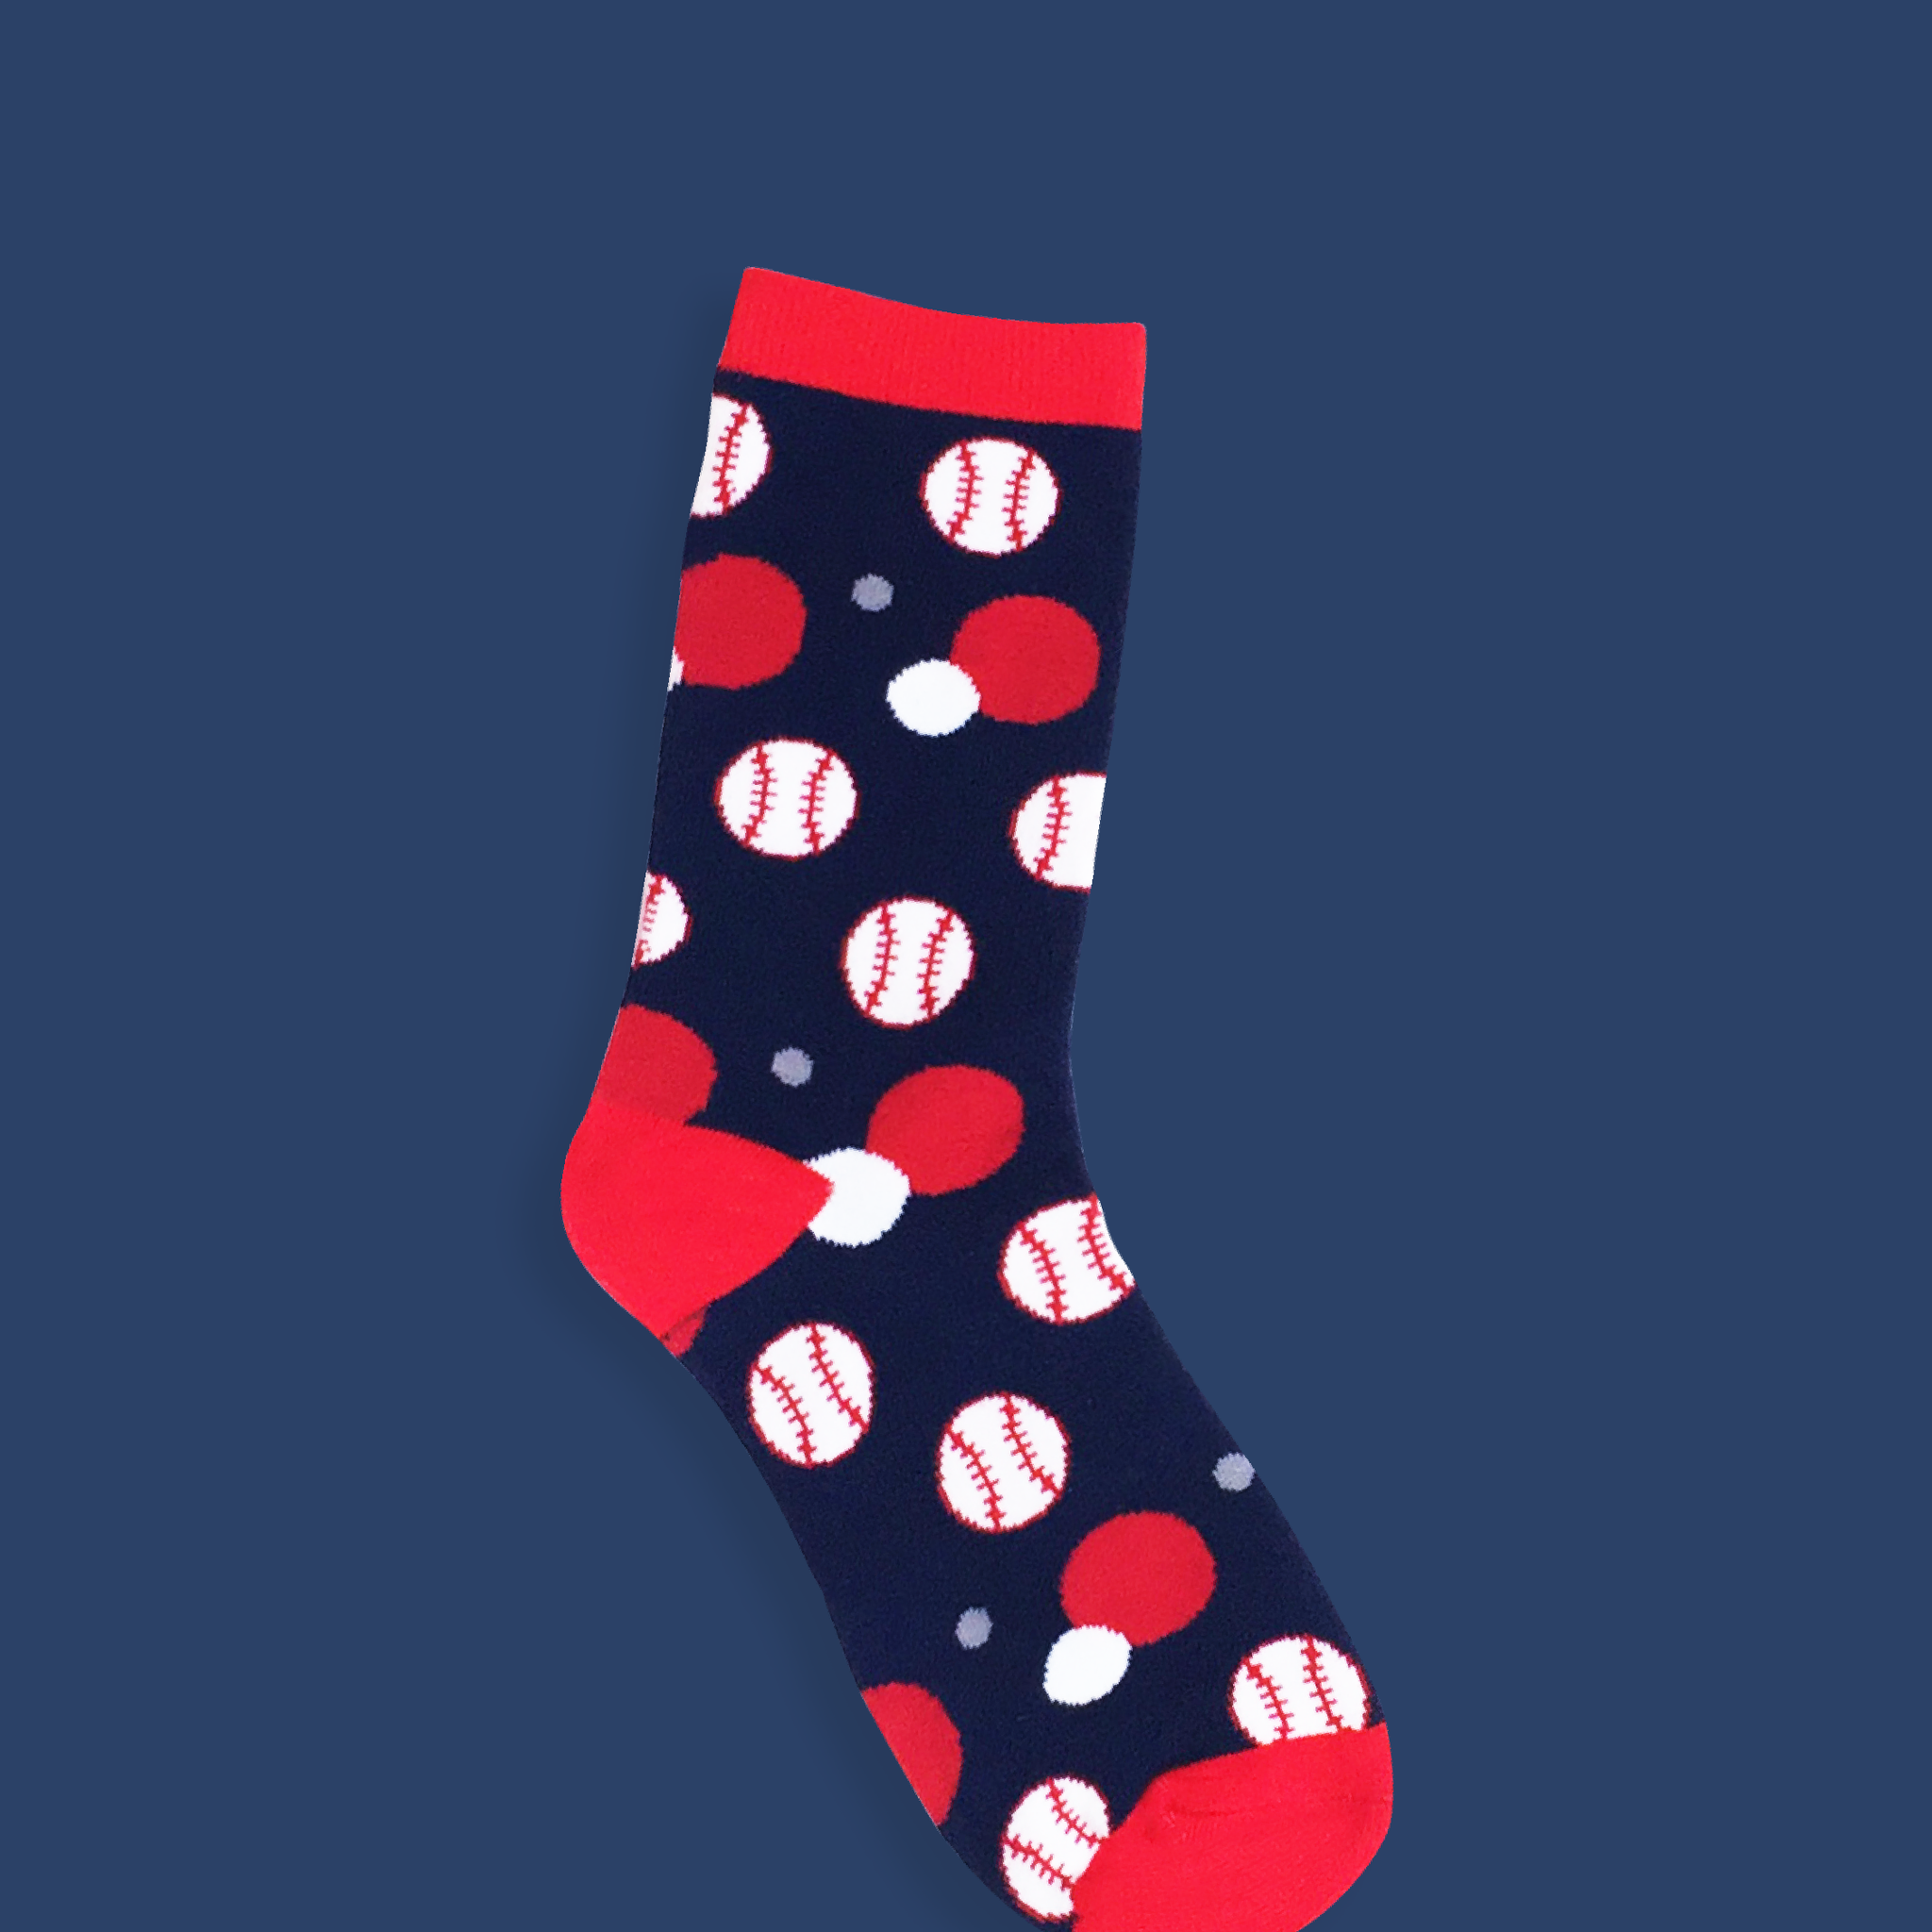 The Single Socks I Sally Baseballs